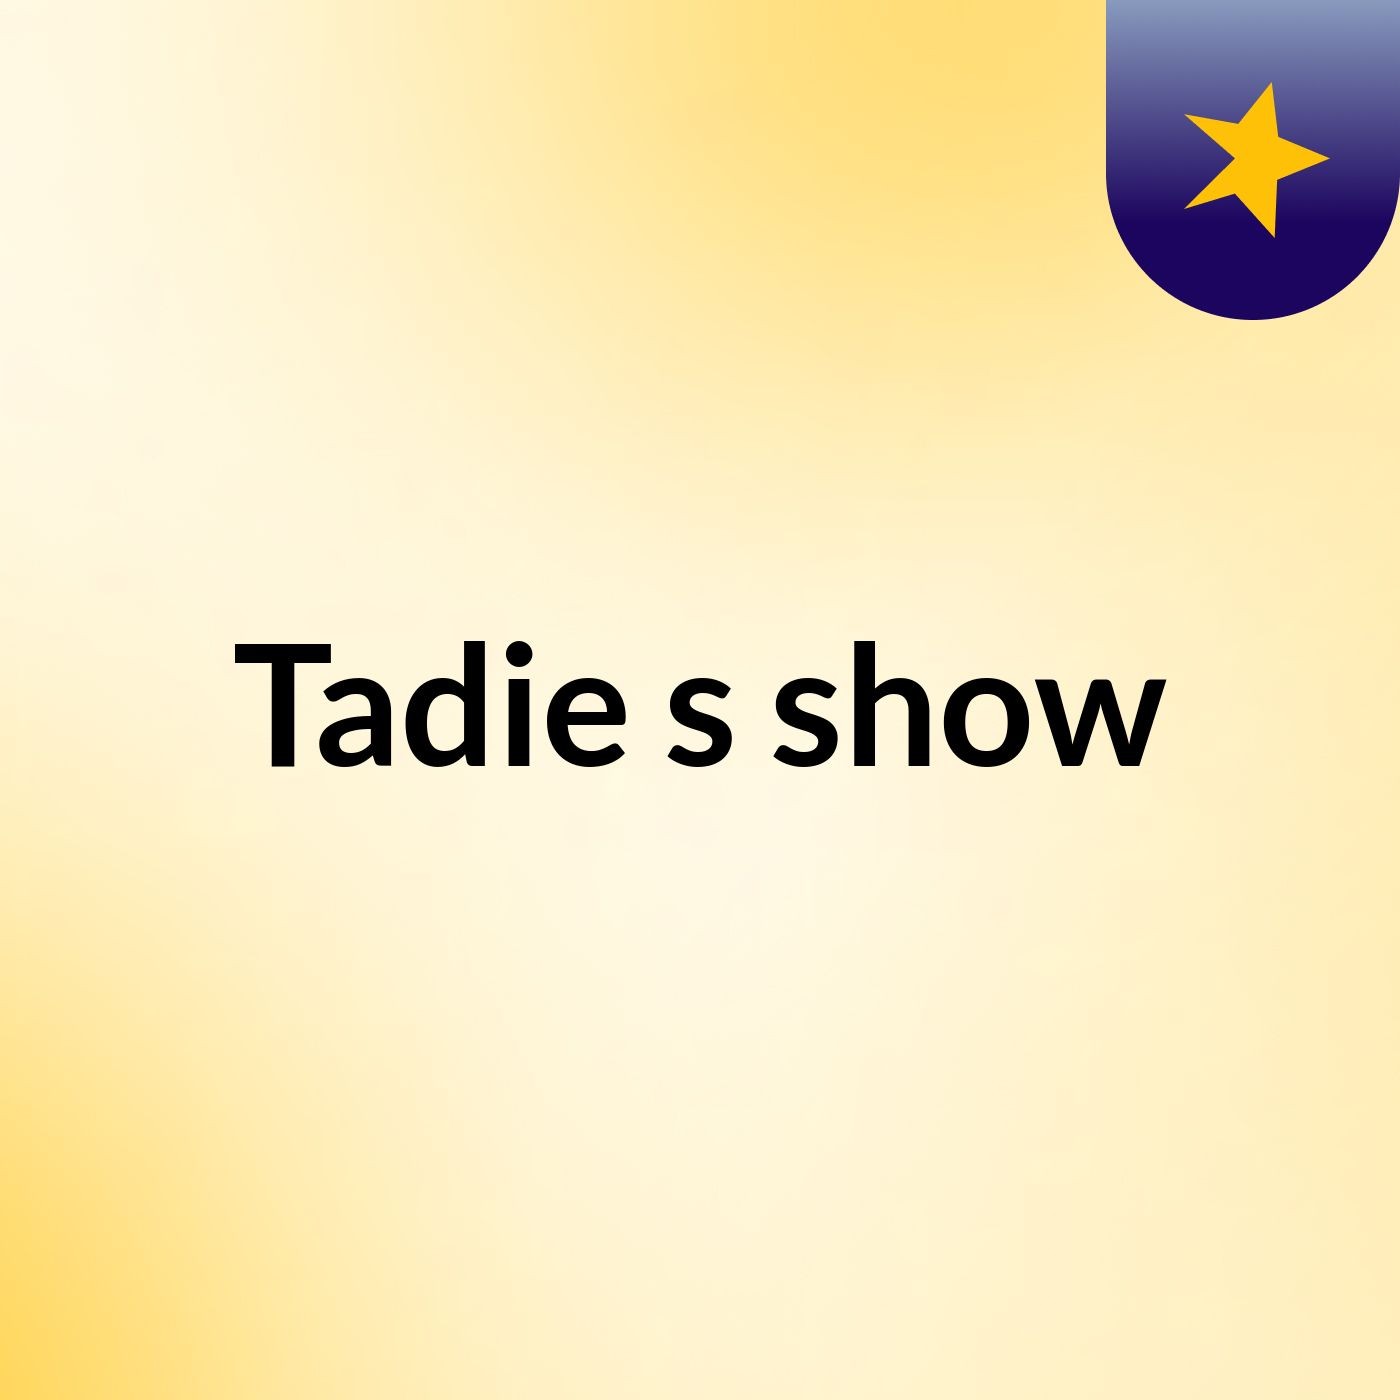 Tadie's show